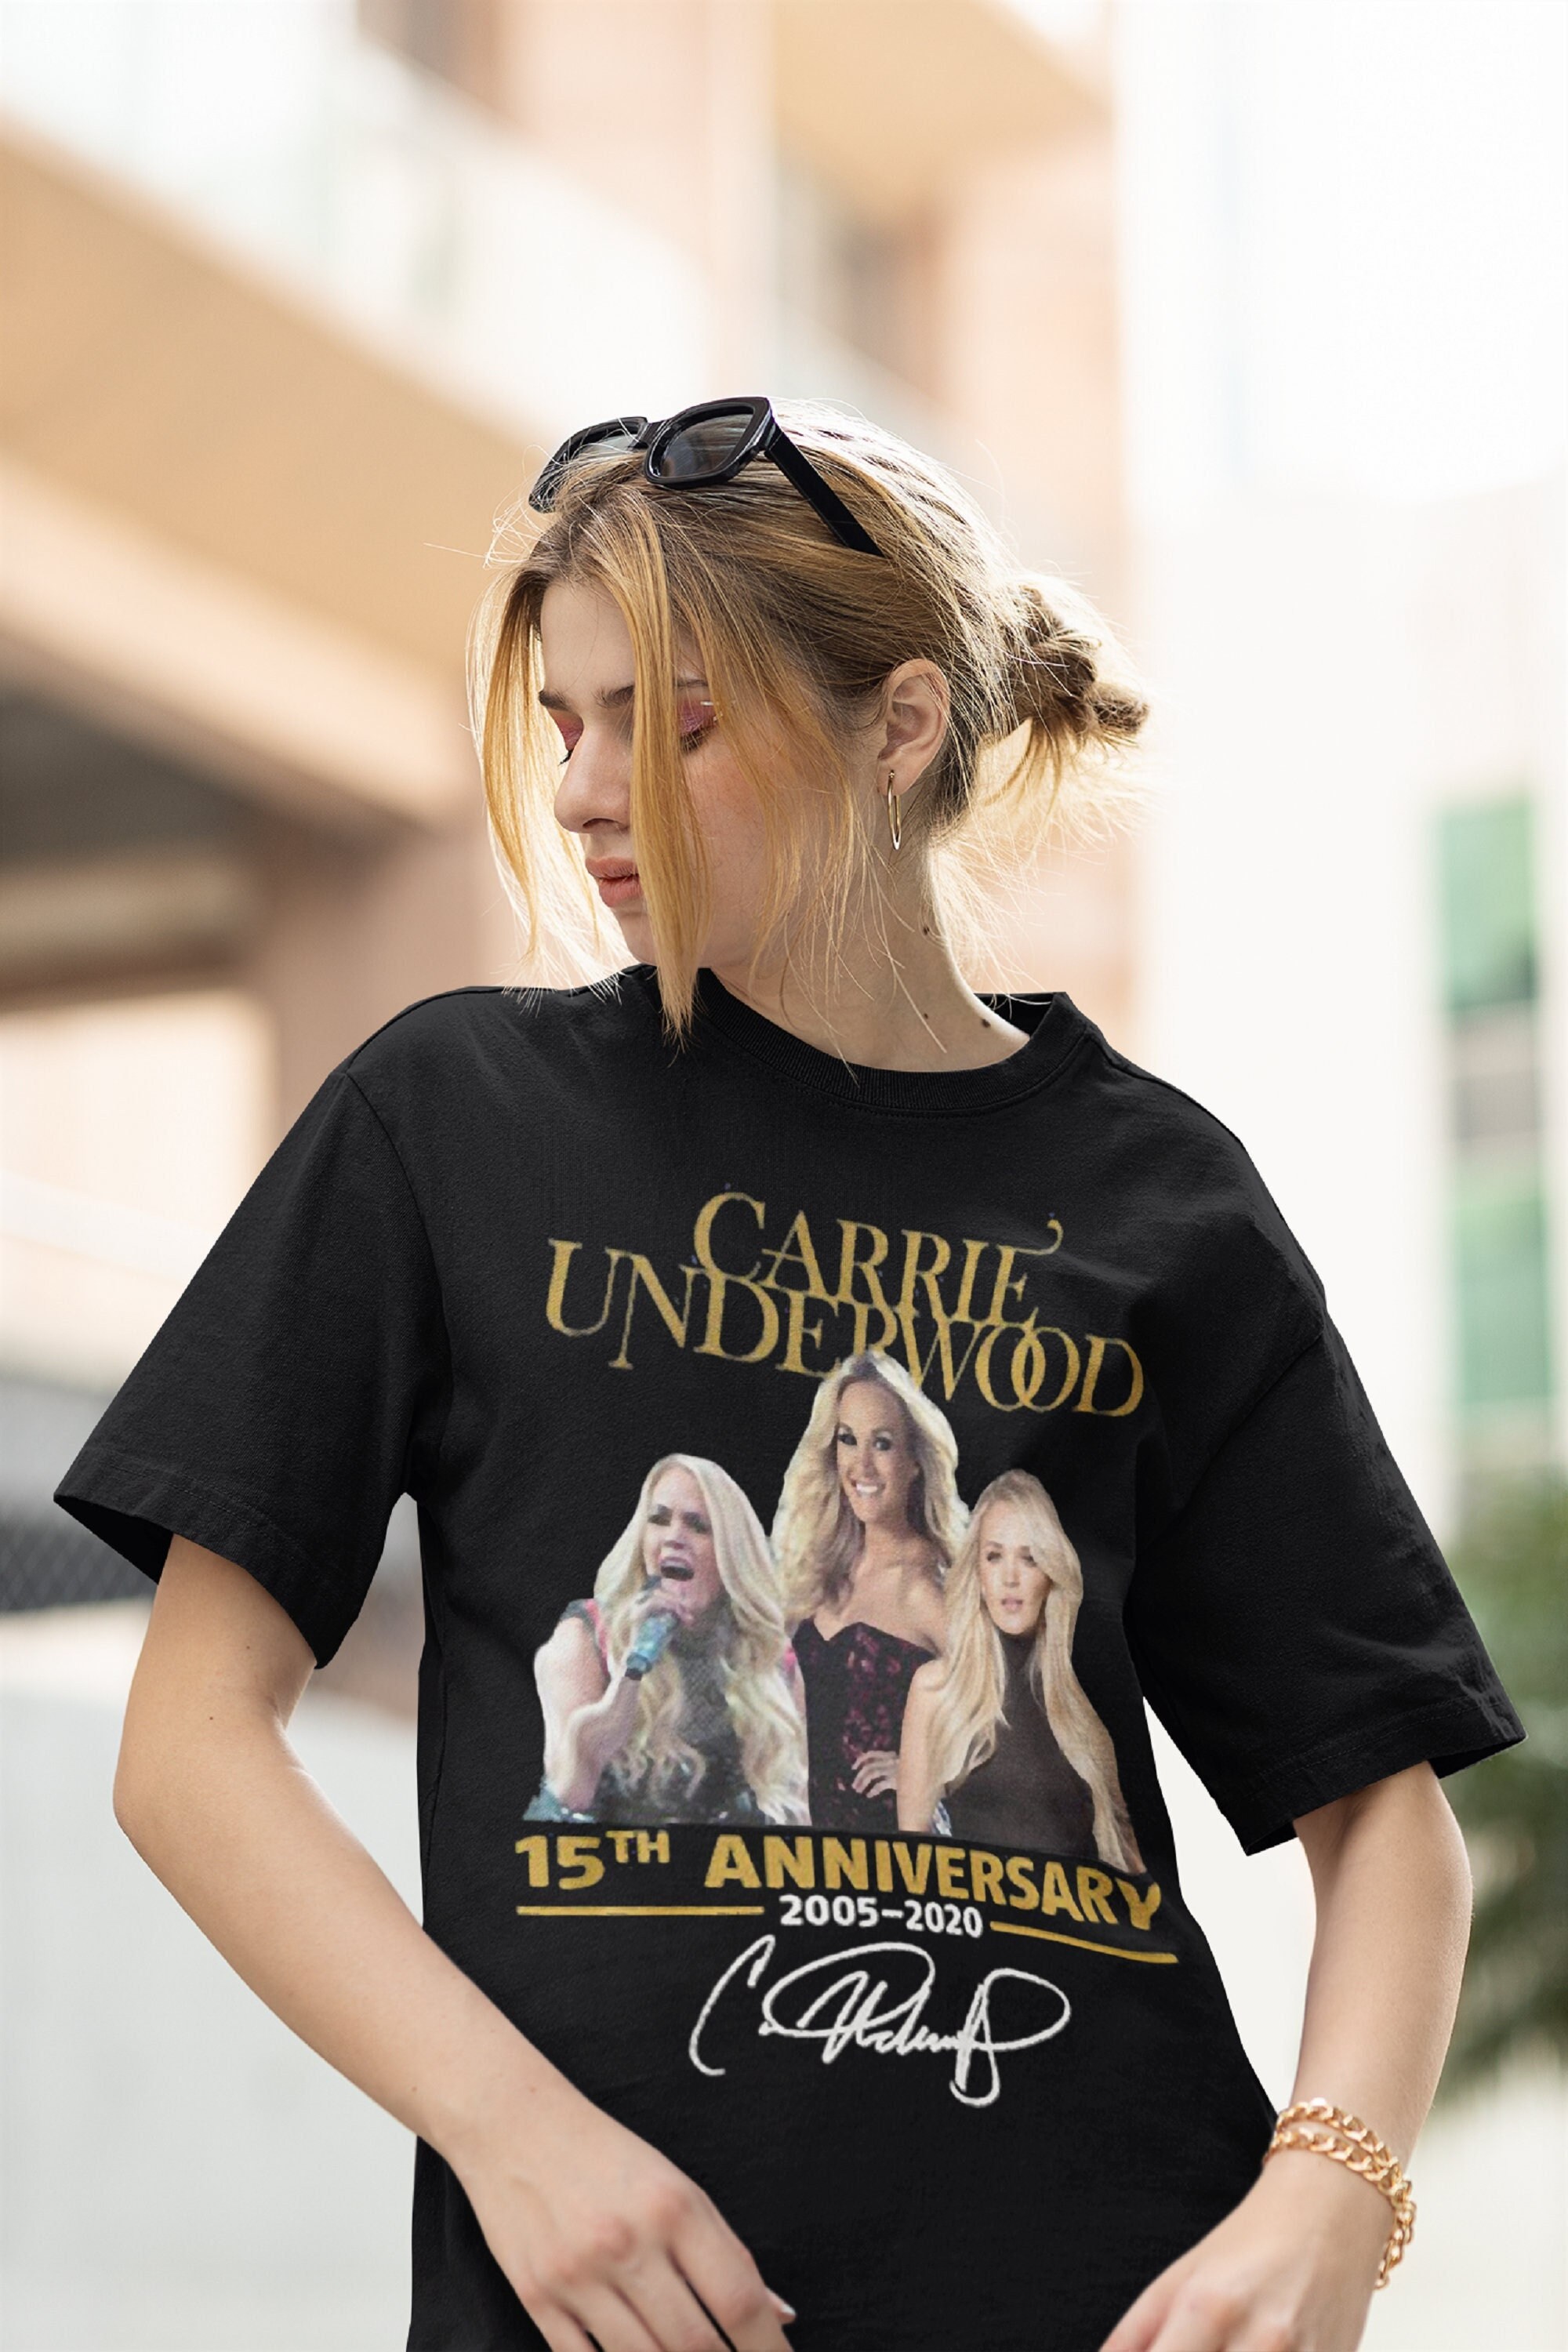 Carrie Underwood Denim And Rhinestones Tour 2022 T-Shirt